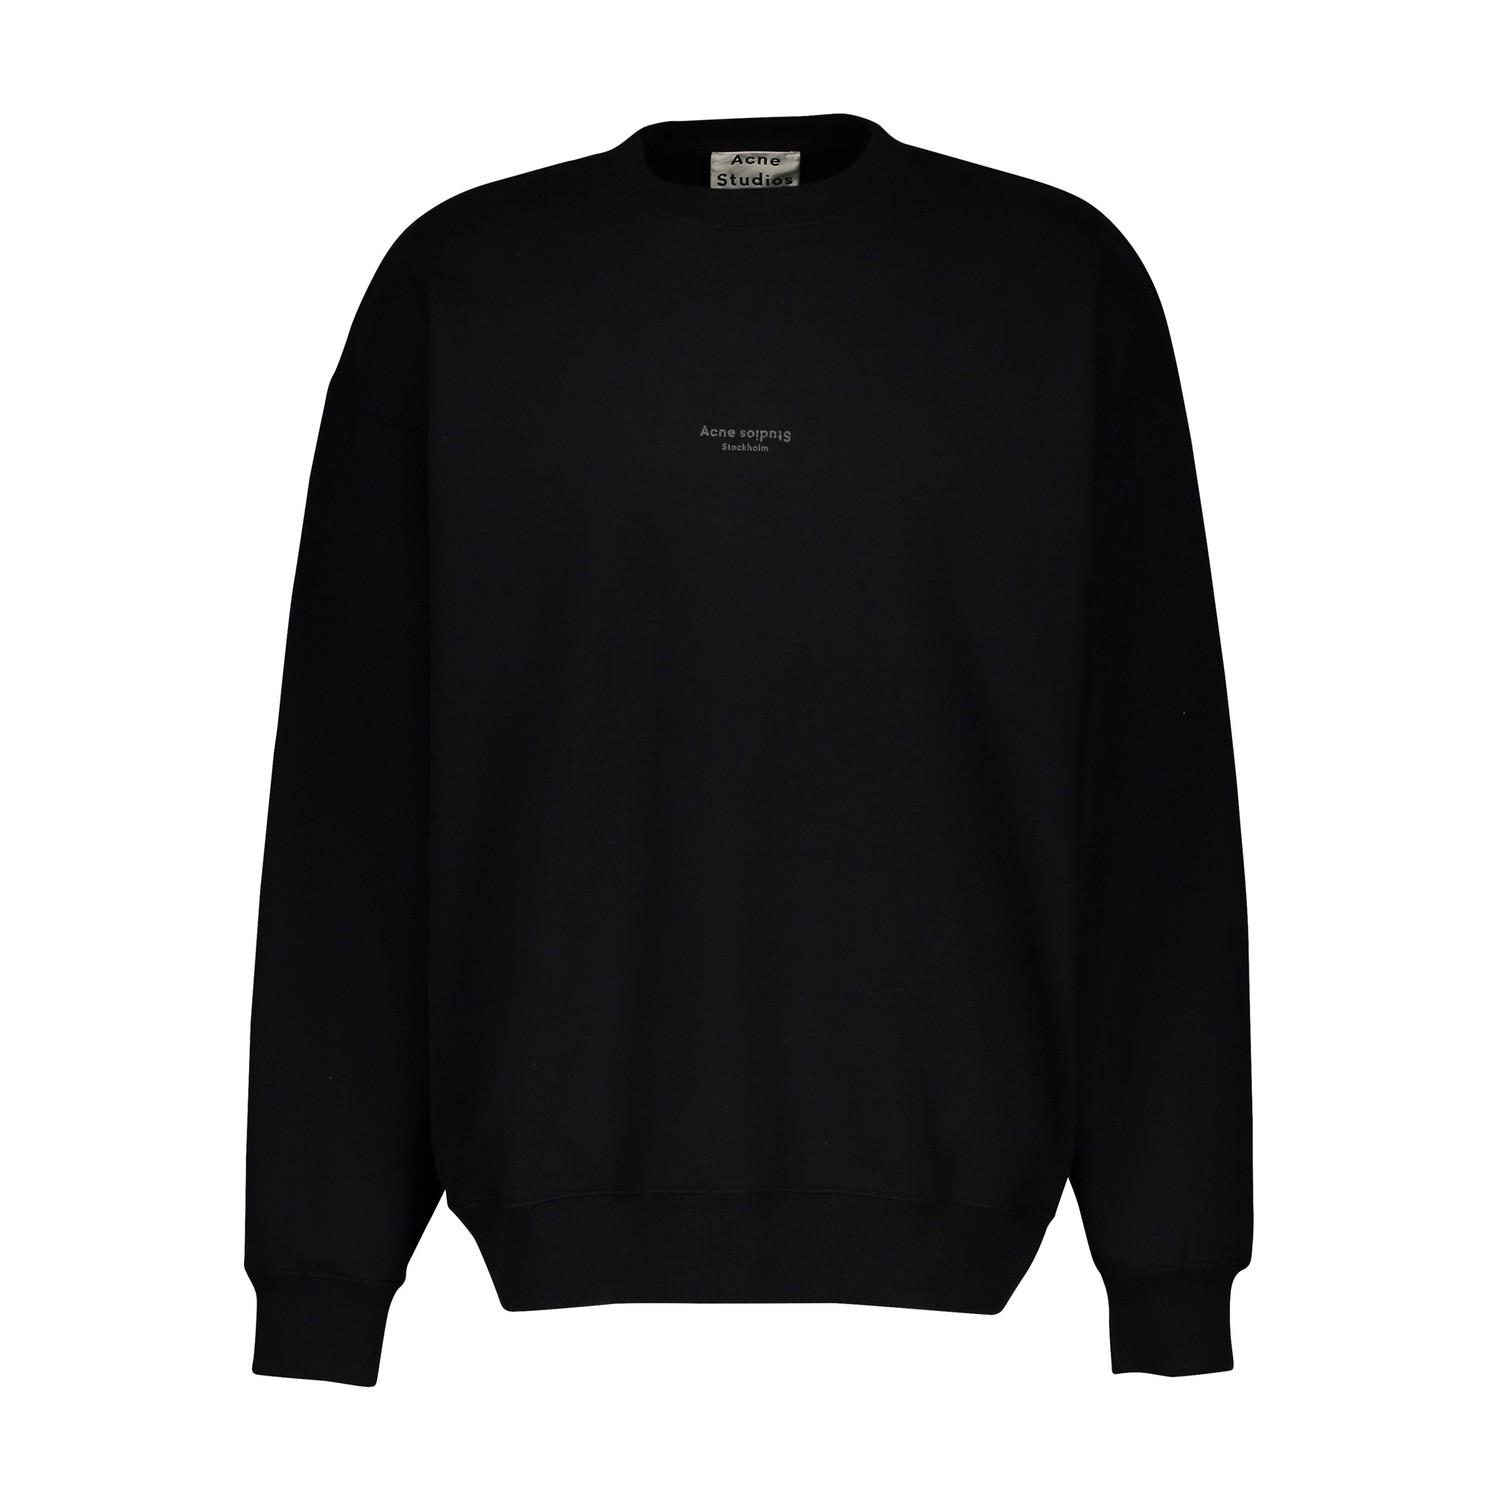 Acne Studios Logo Sweatshirt in Black for Men - Lyst